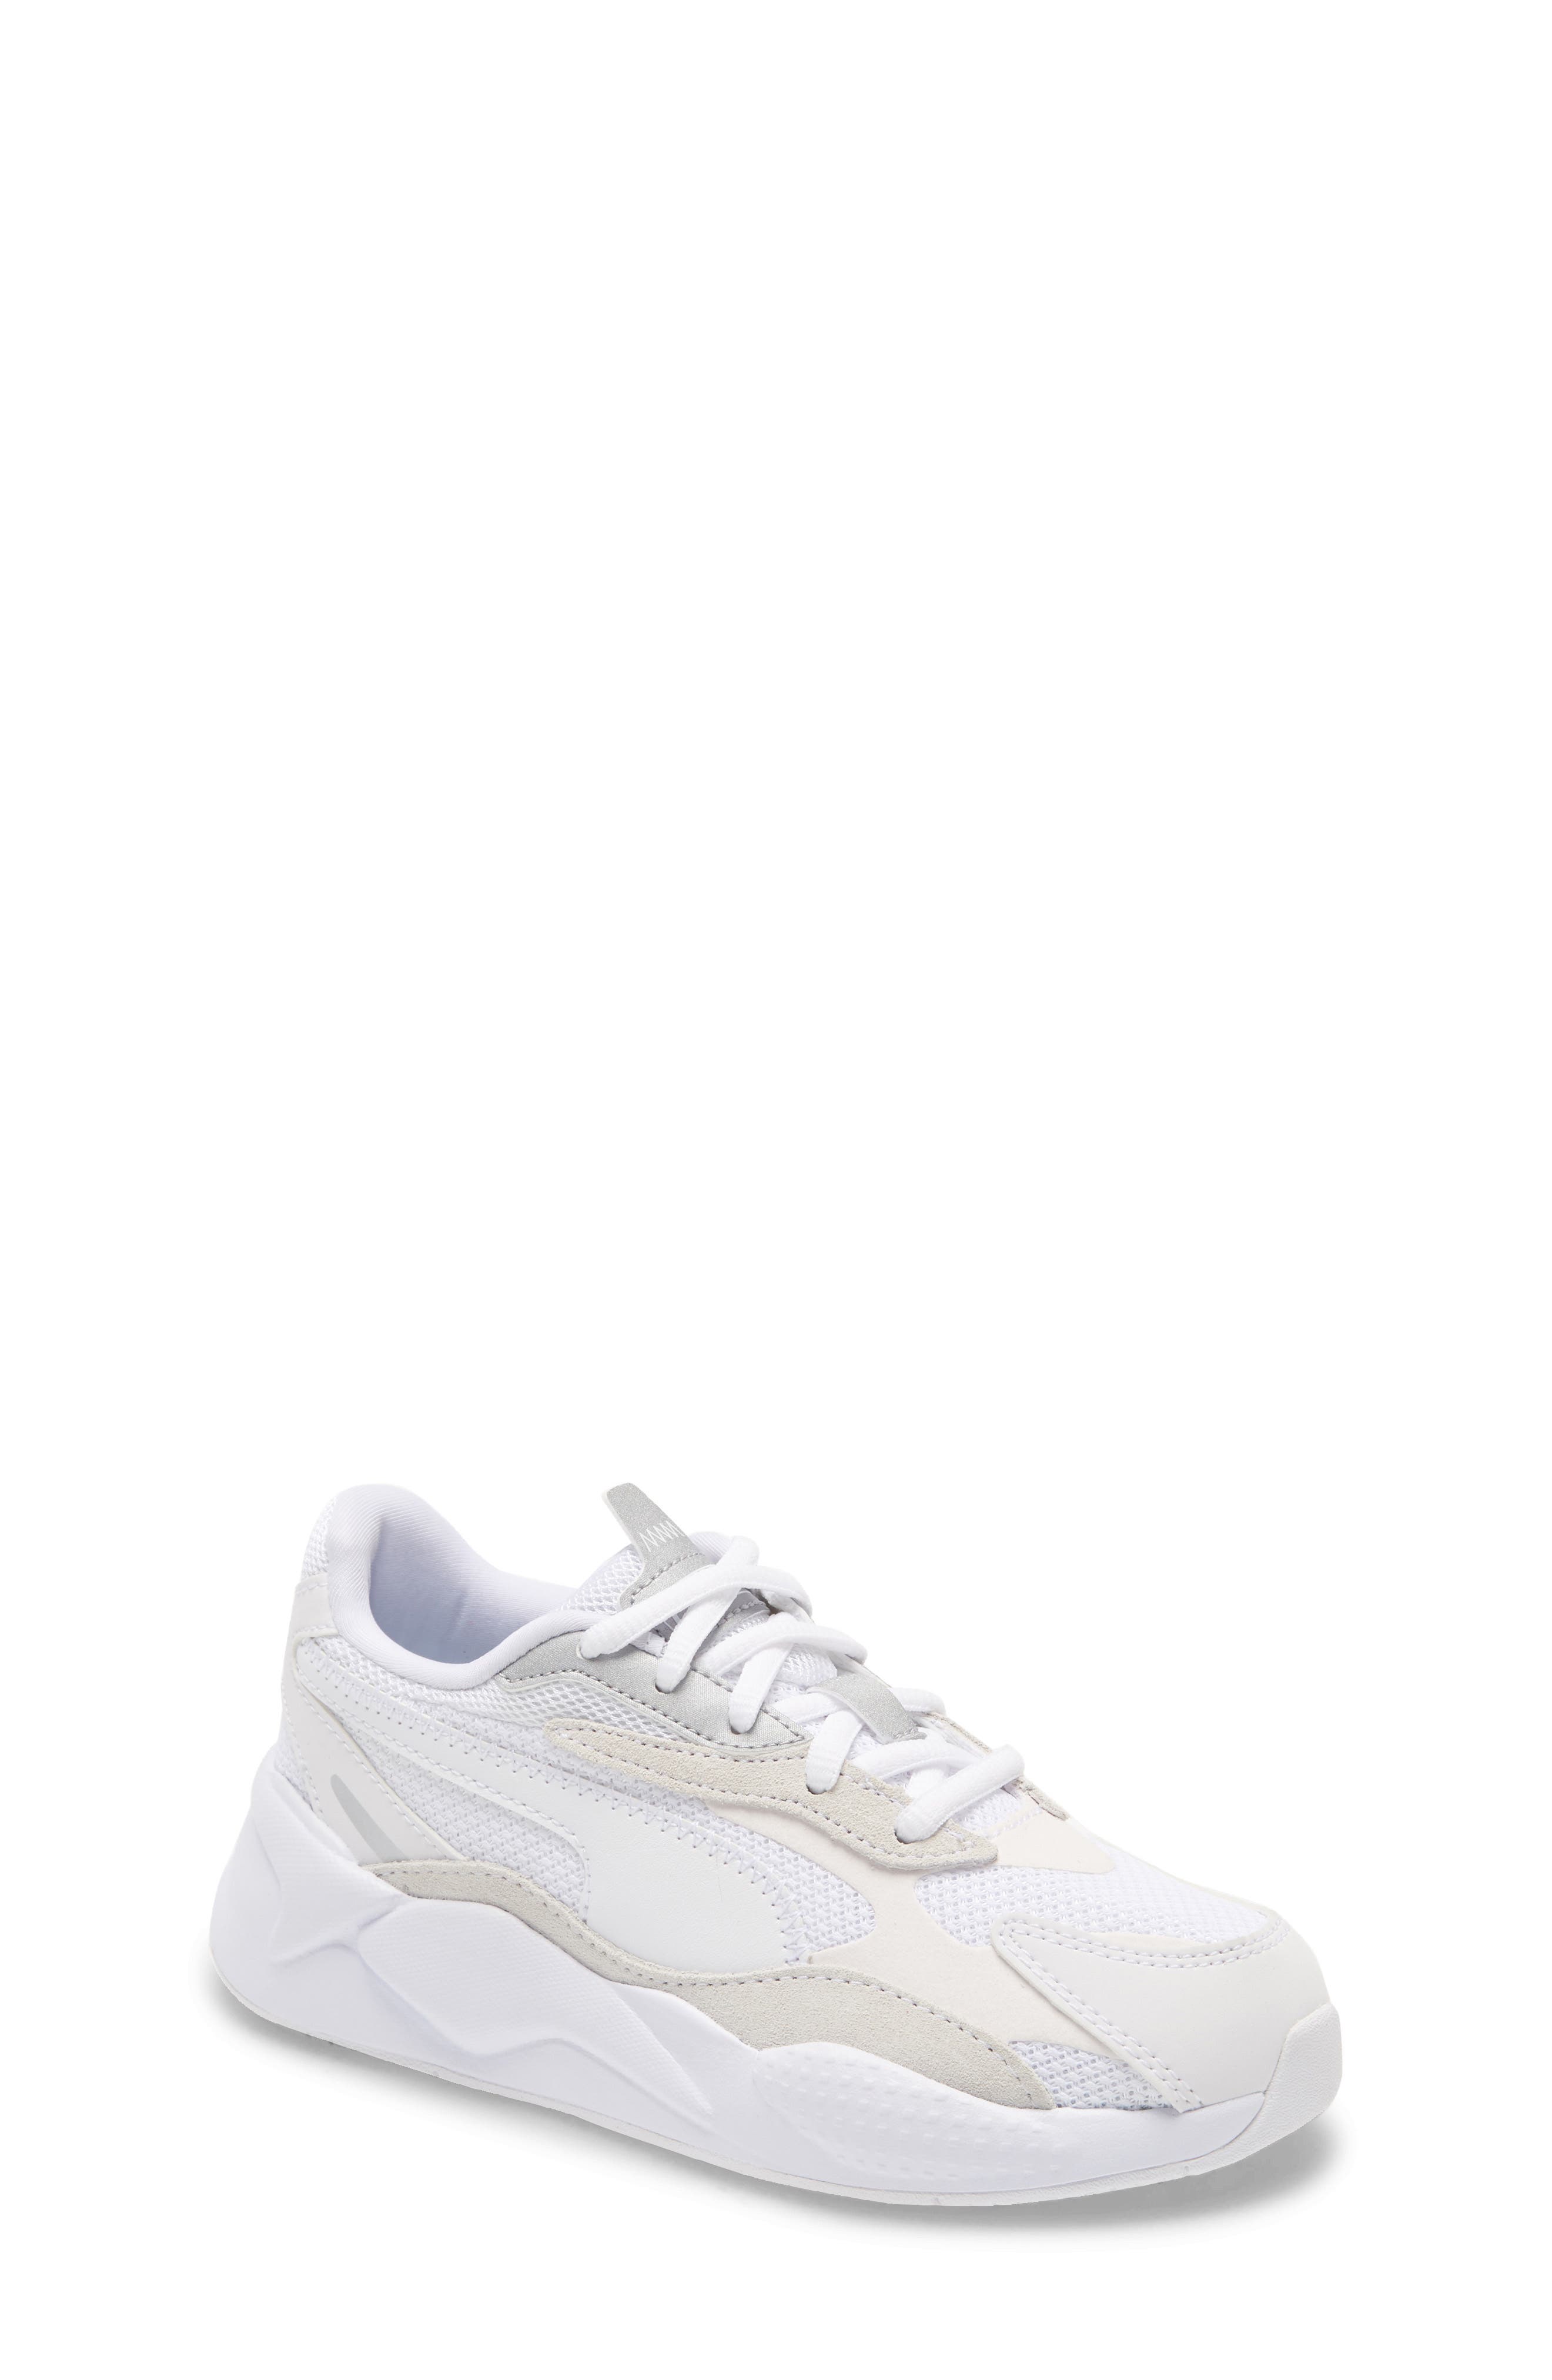 girls white puma shoes